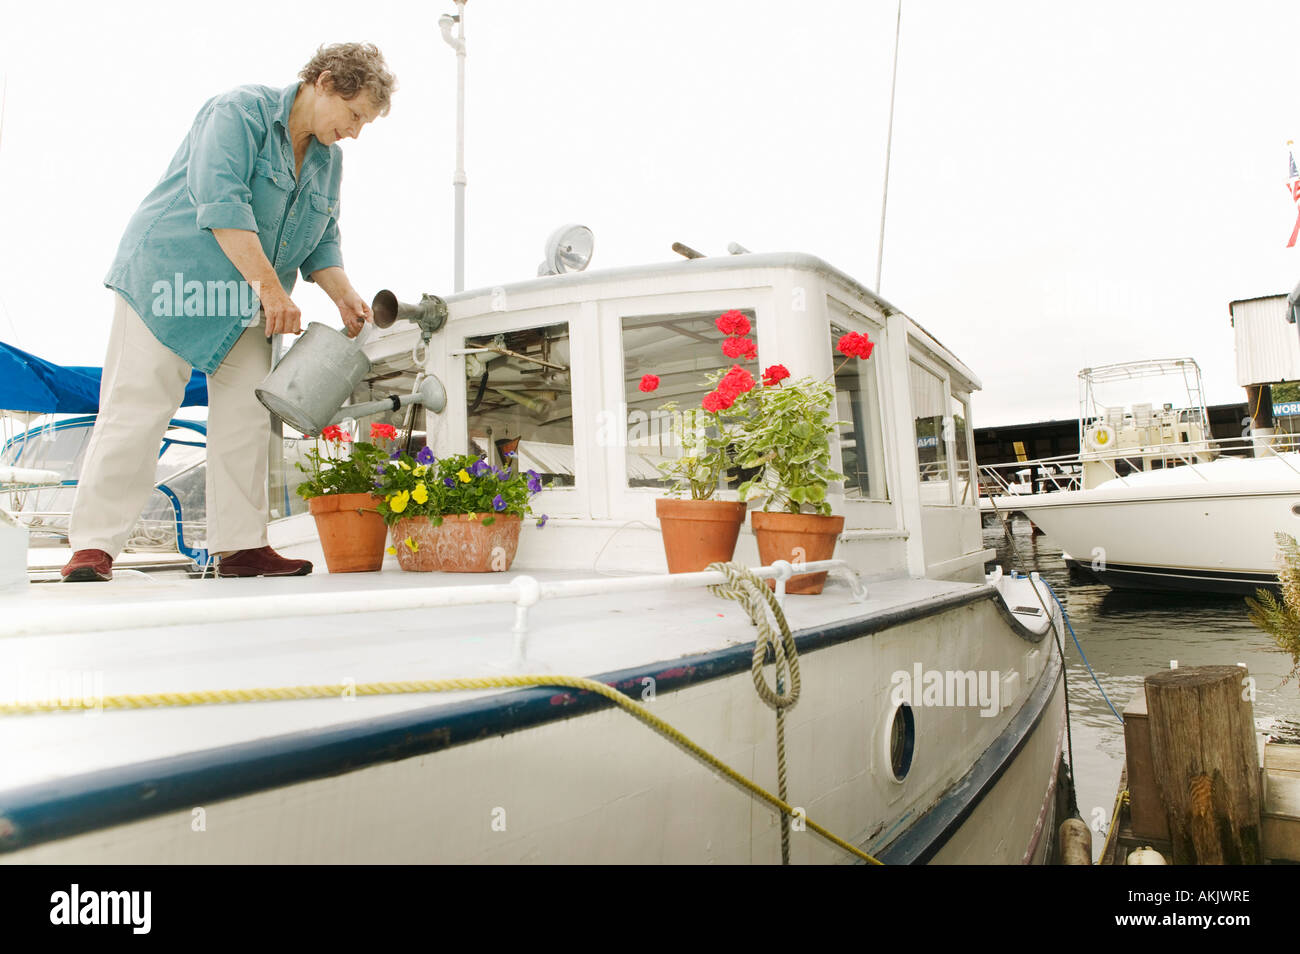 Woman watering plants on houseboat Stock Photo